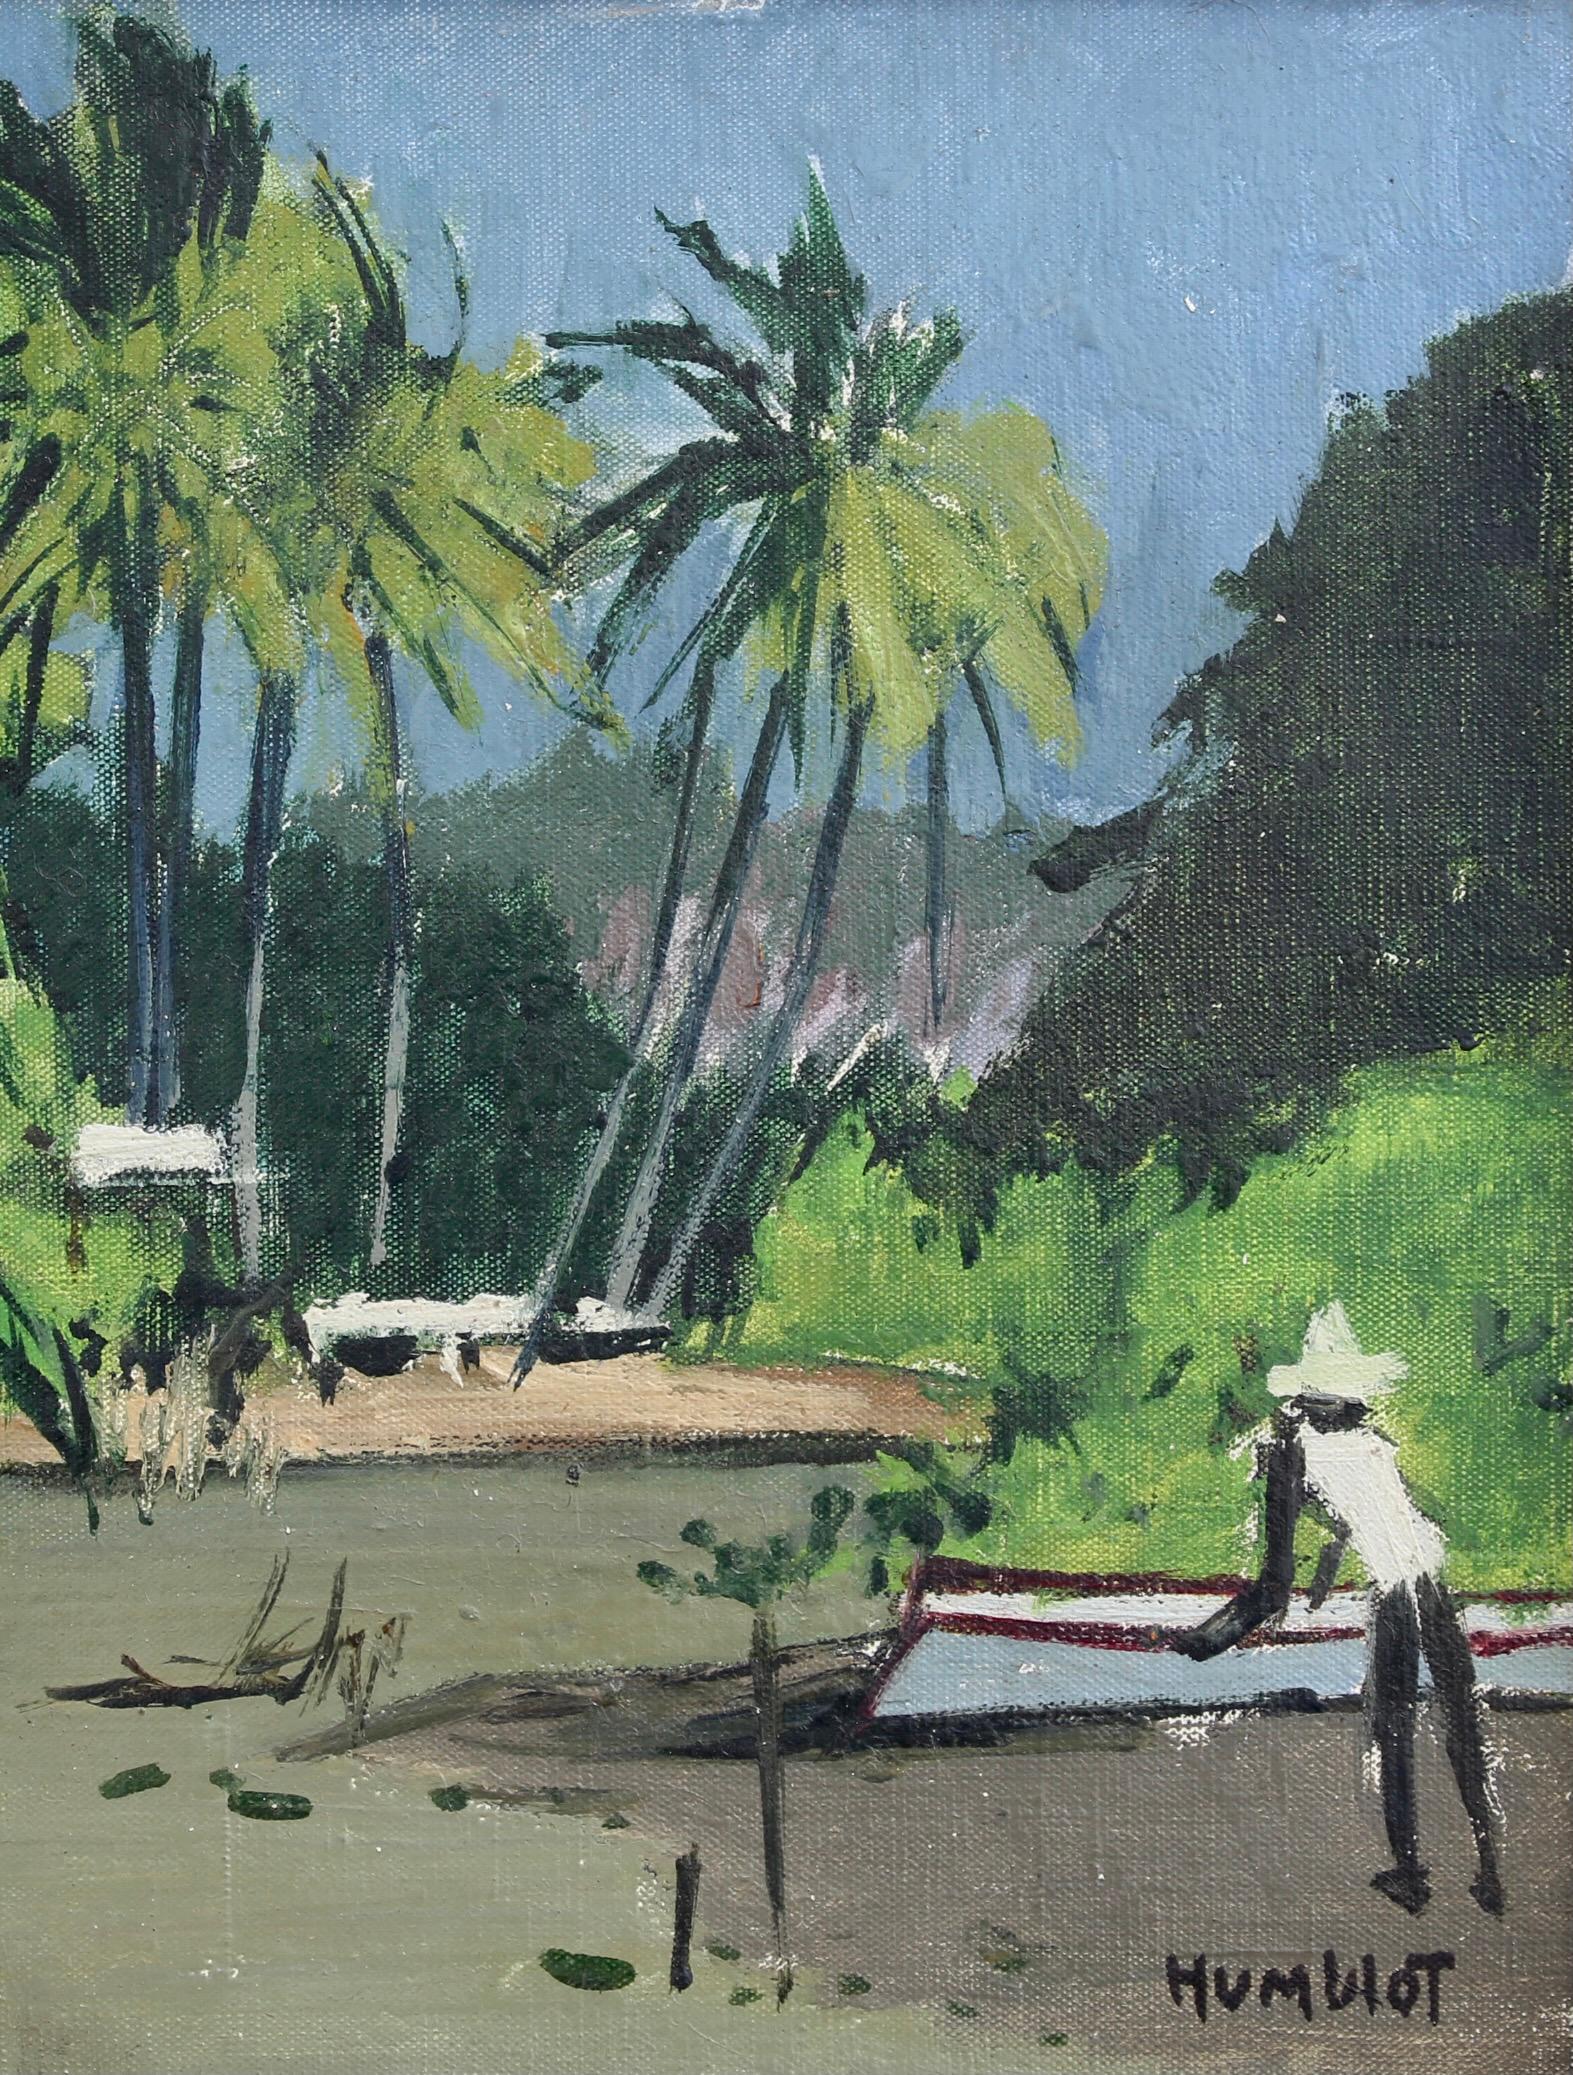 Bureau sur Schoelcher Lagoon Martinique - Painting de Robert Humblot